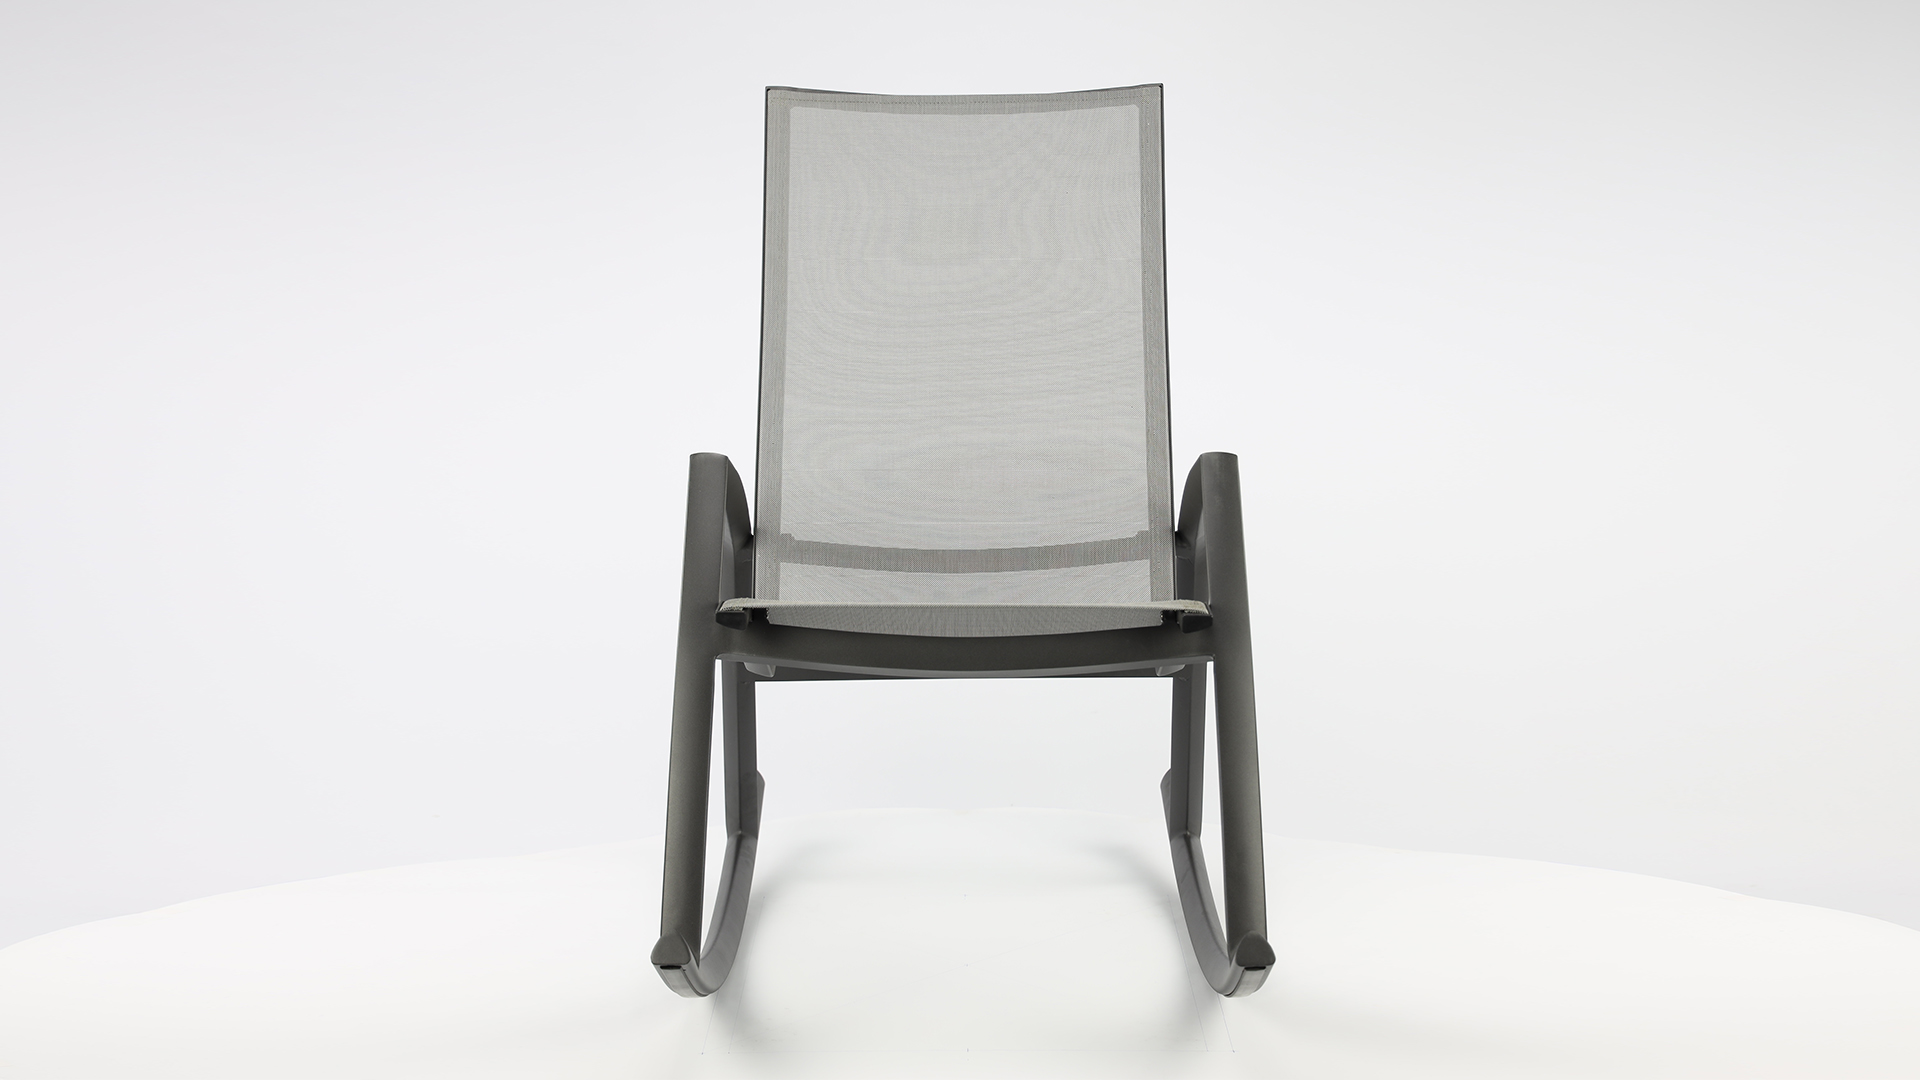 Alu Rocking Chair Kennedy Charcoal Mat - Silver Gray Textilene